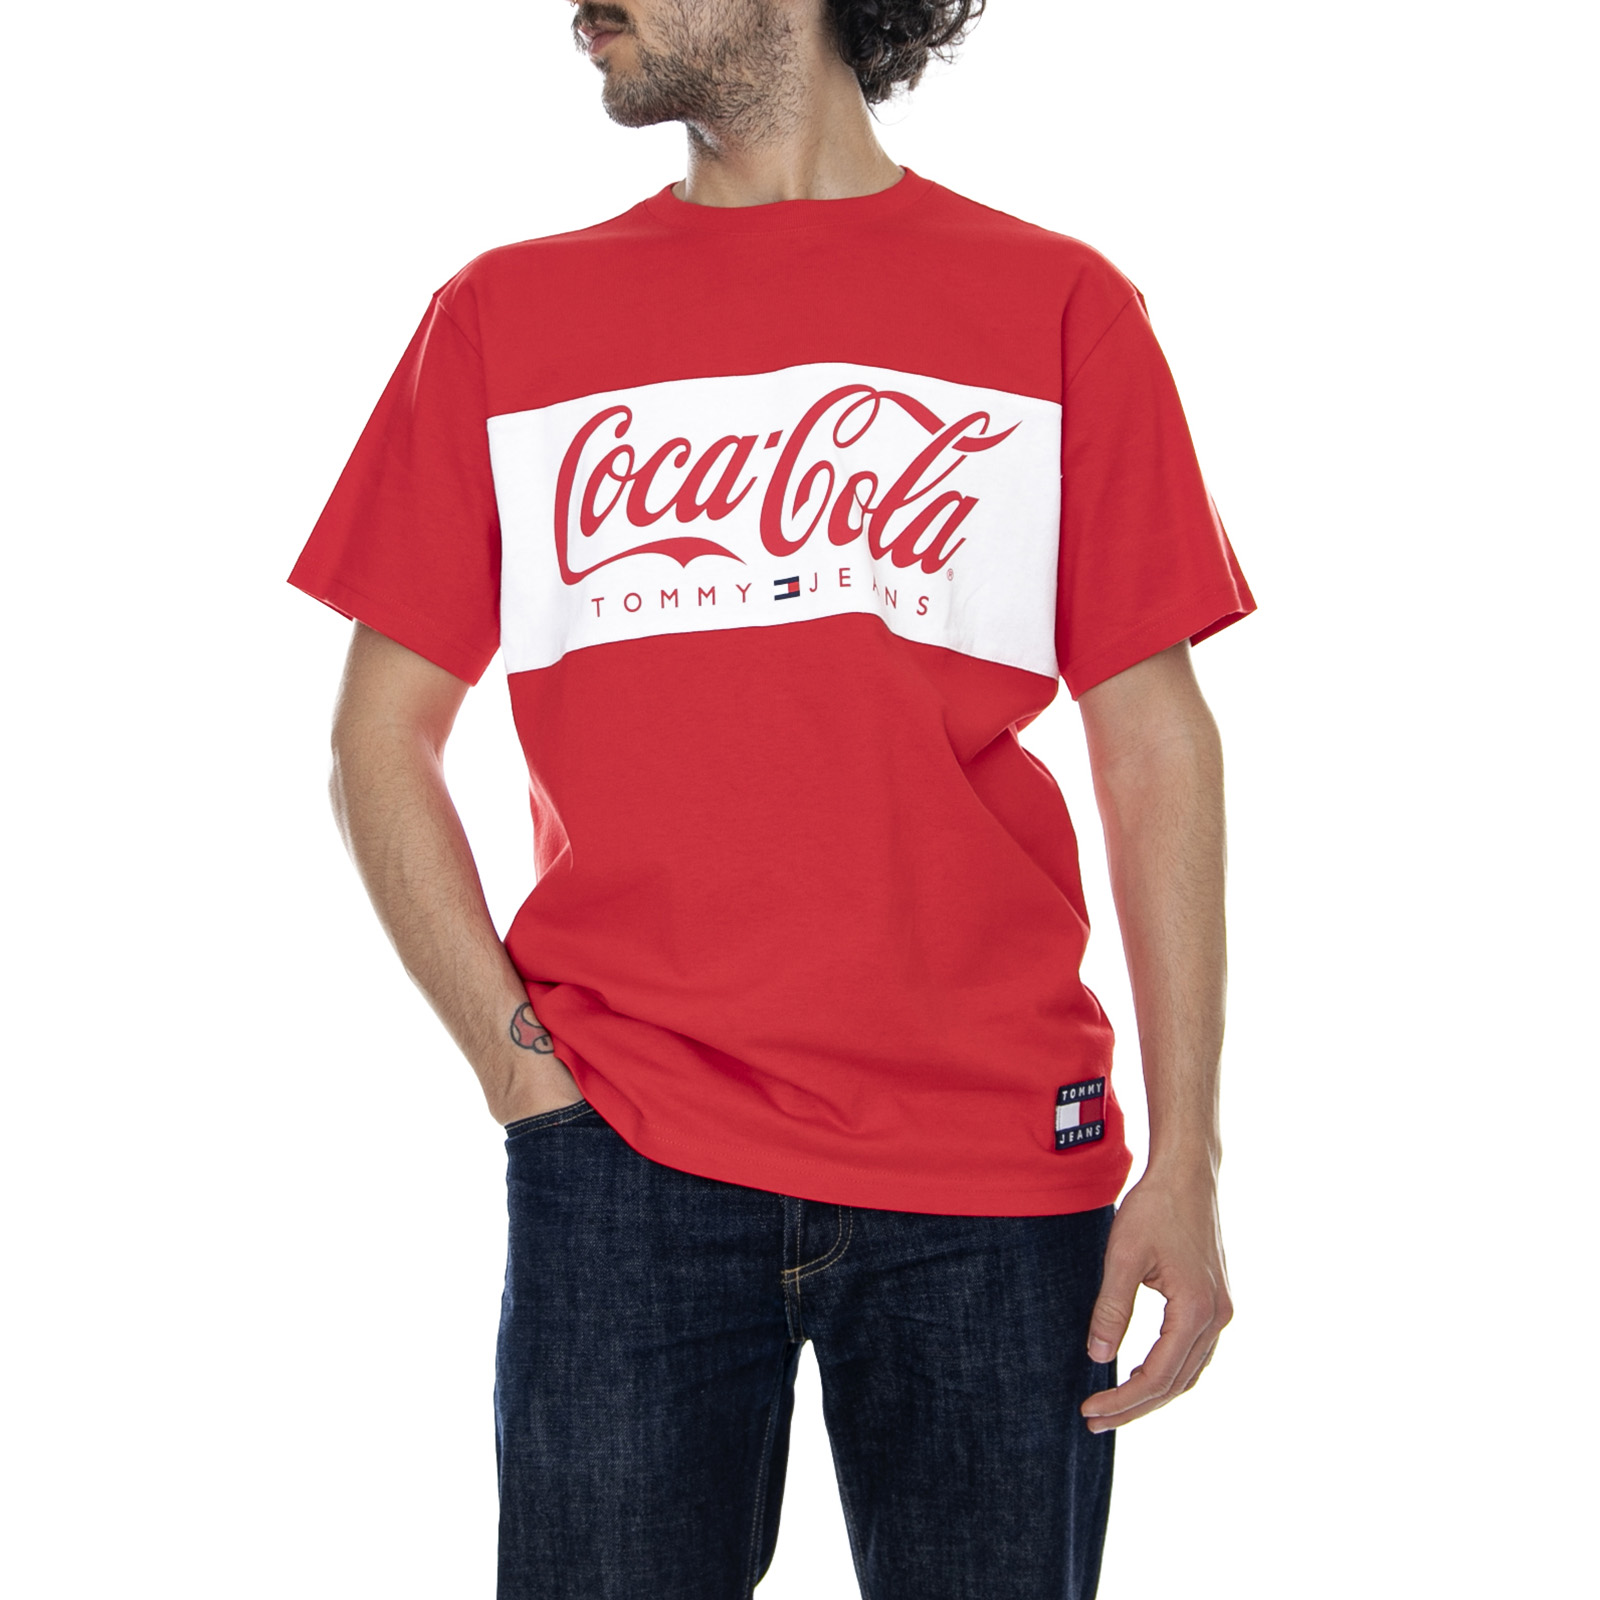 tommy hilfiger coca cola t shirt cheap 